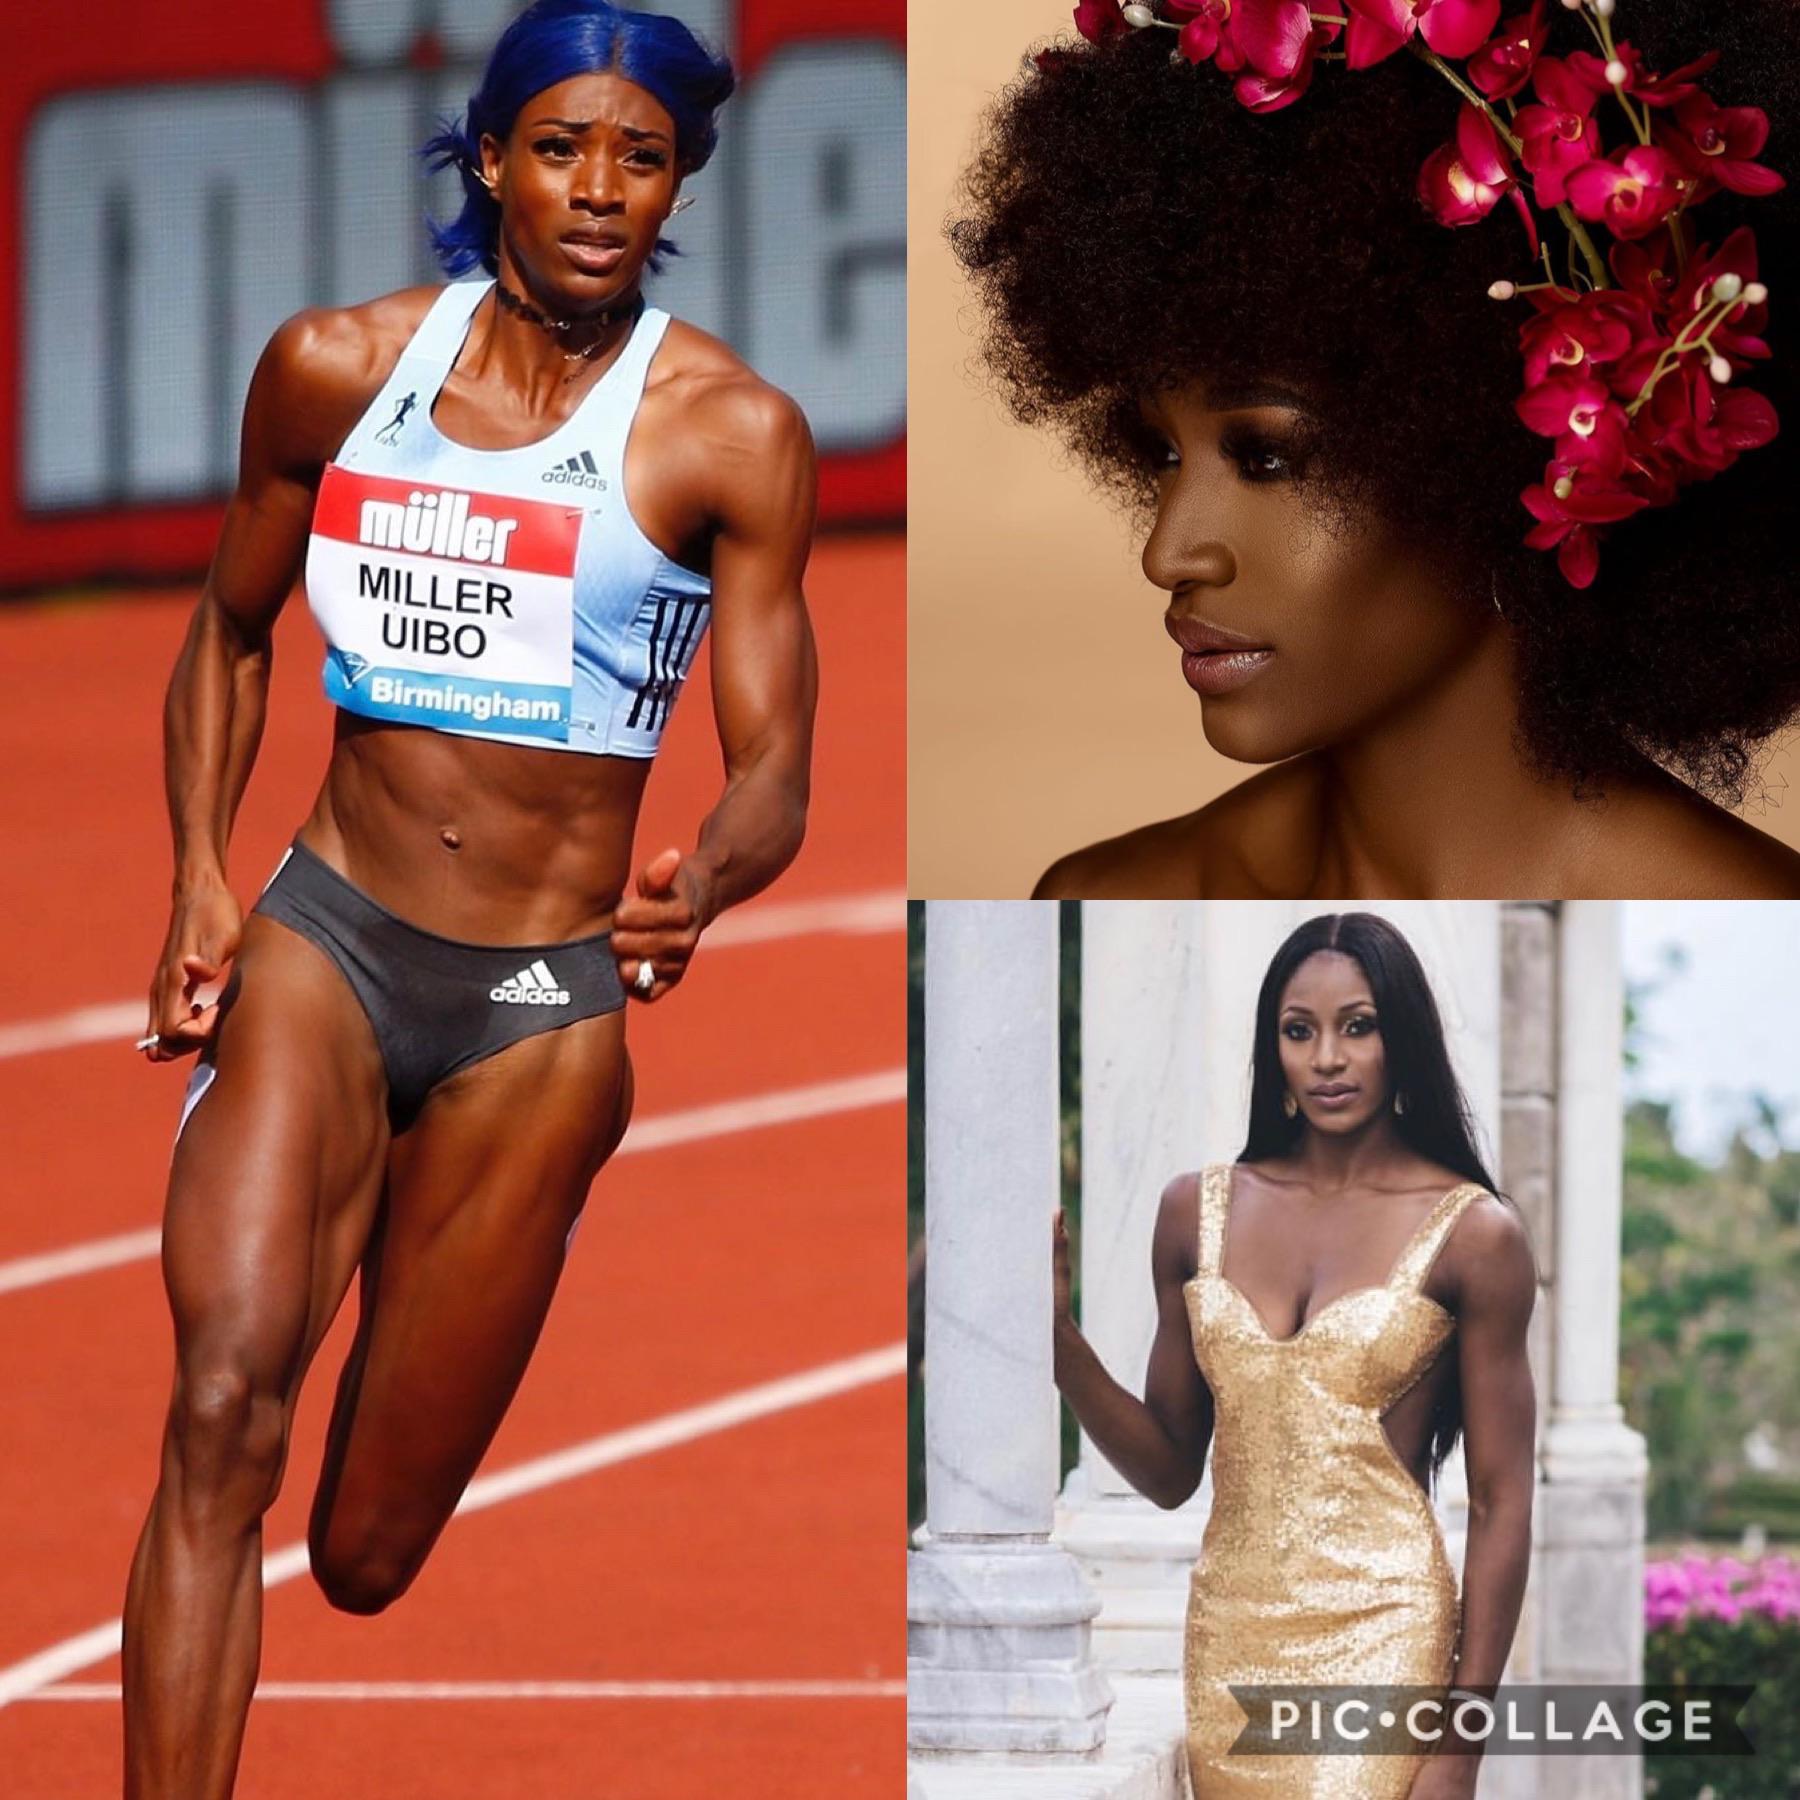 Bahamian Gold Medalist Shaunae Miller Uib